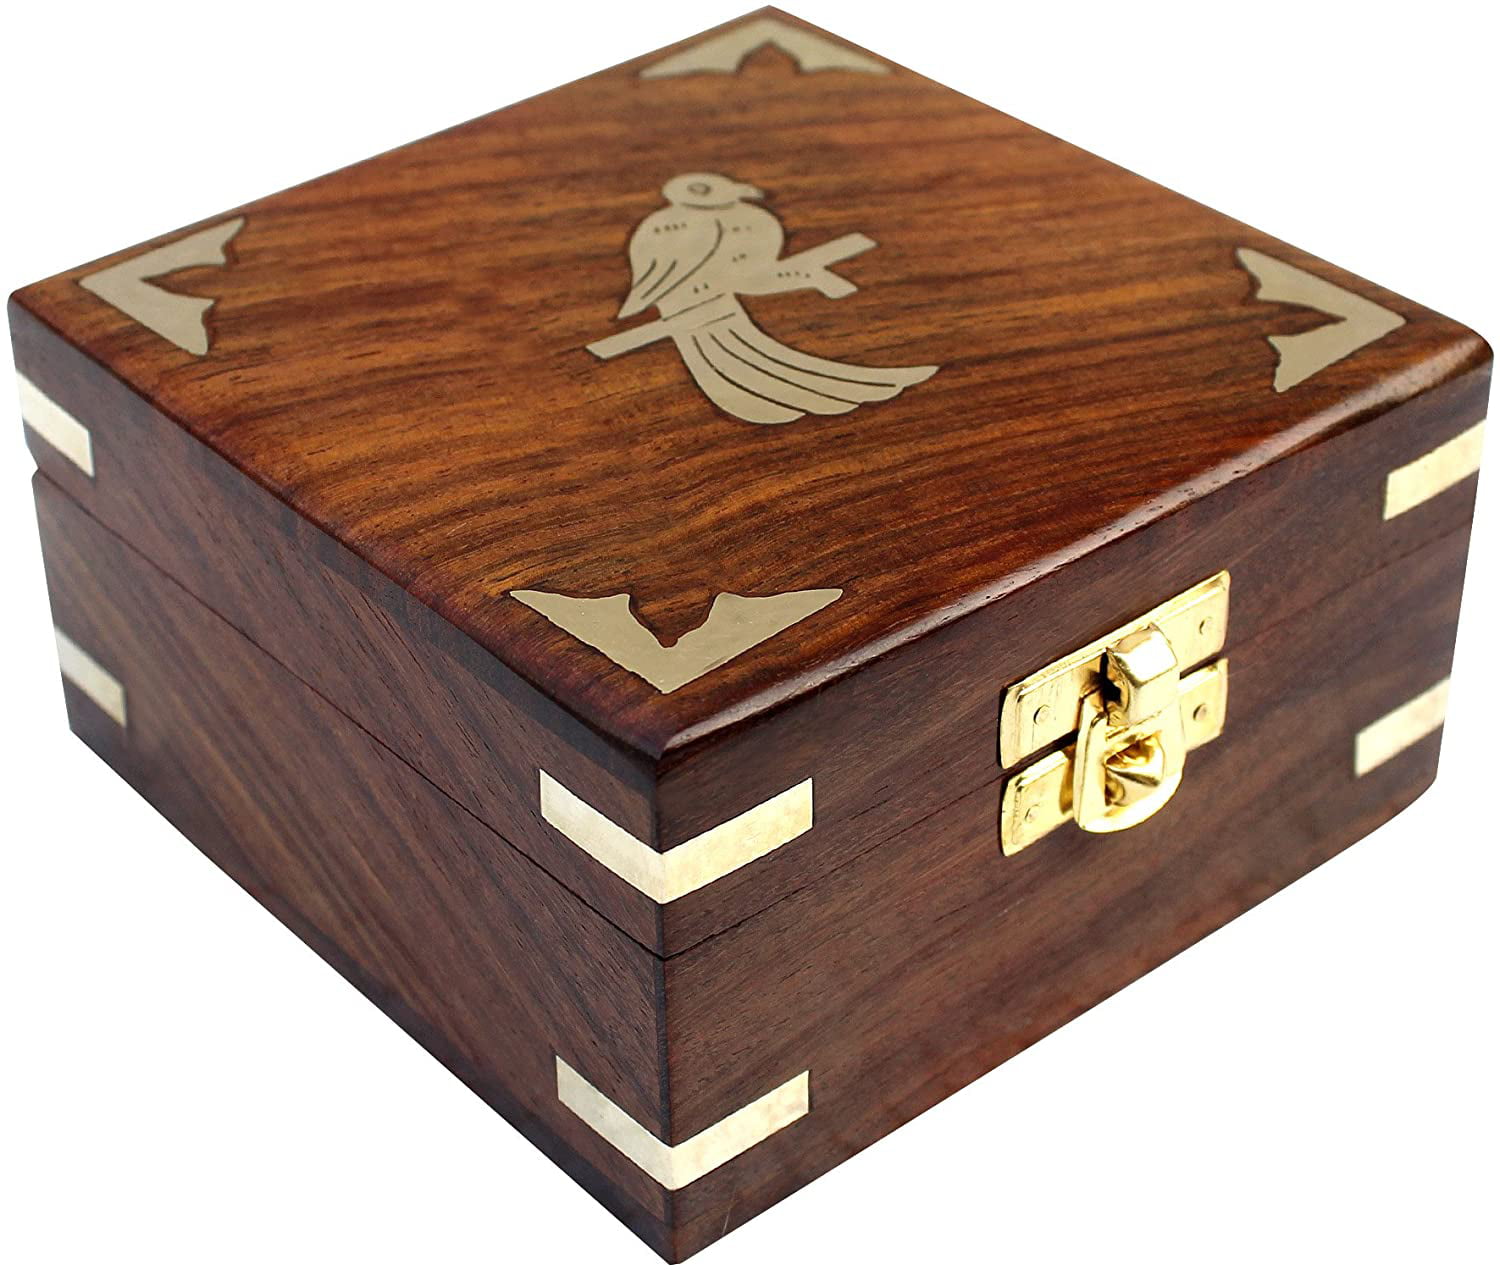 Wood Carved Jewelry Box Carved Jewelry Box Hand Carved Wood Box Carved Wood Jewelry Box Carved Wood Chest Mele Jewelry Box